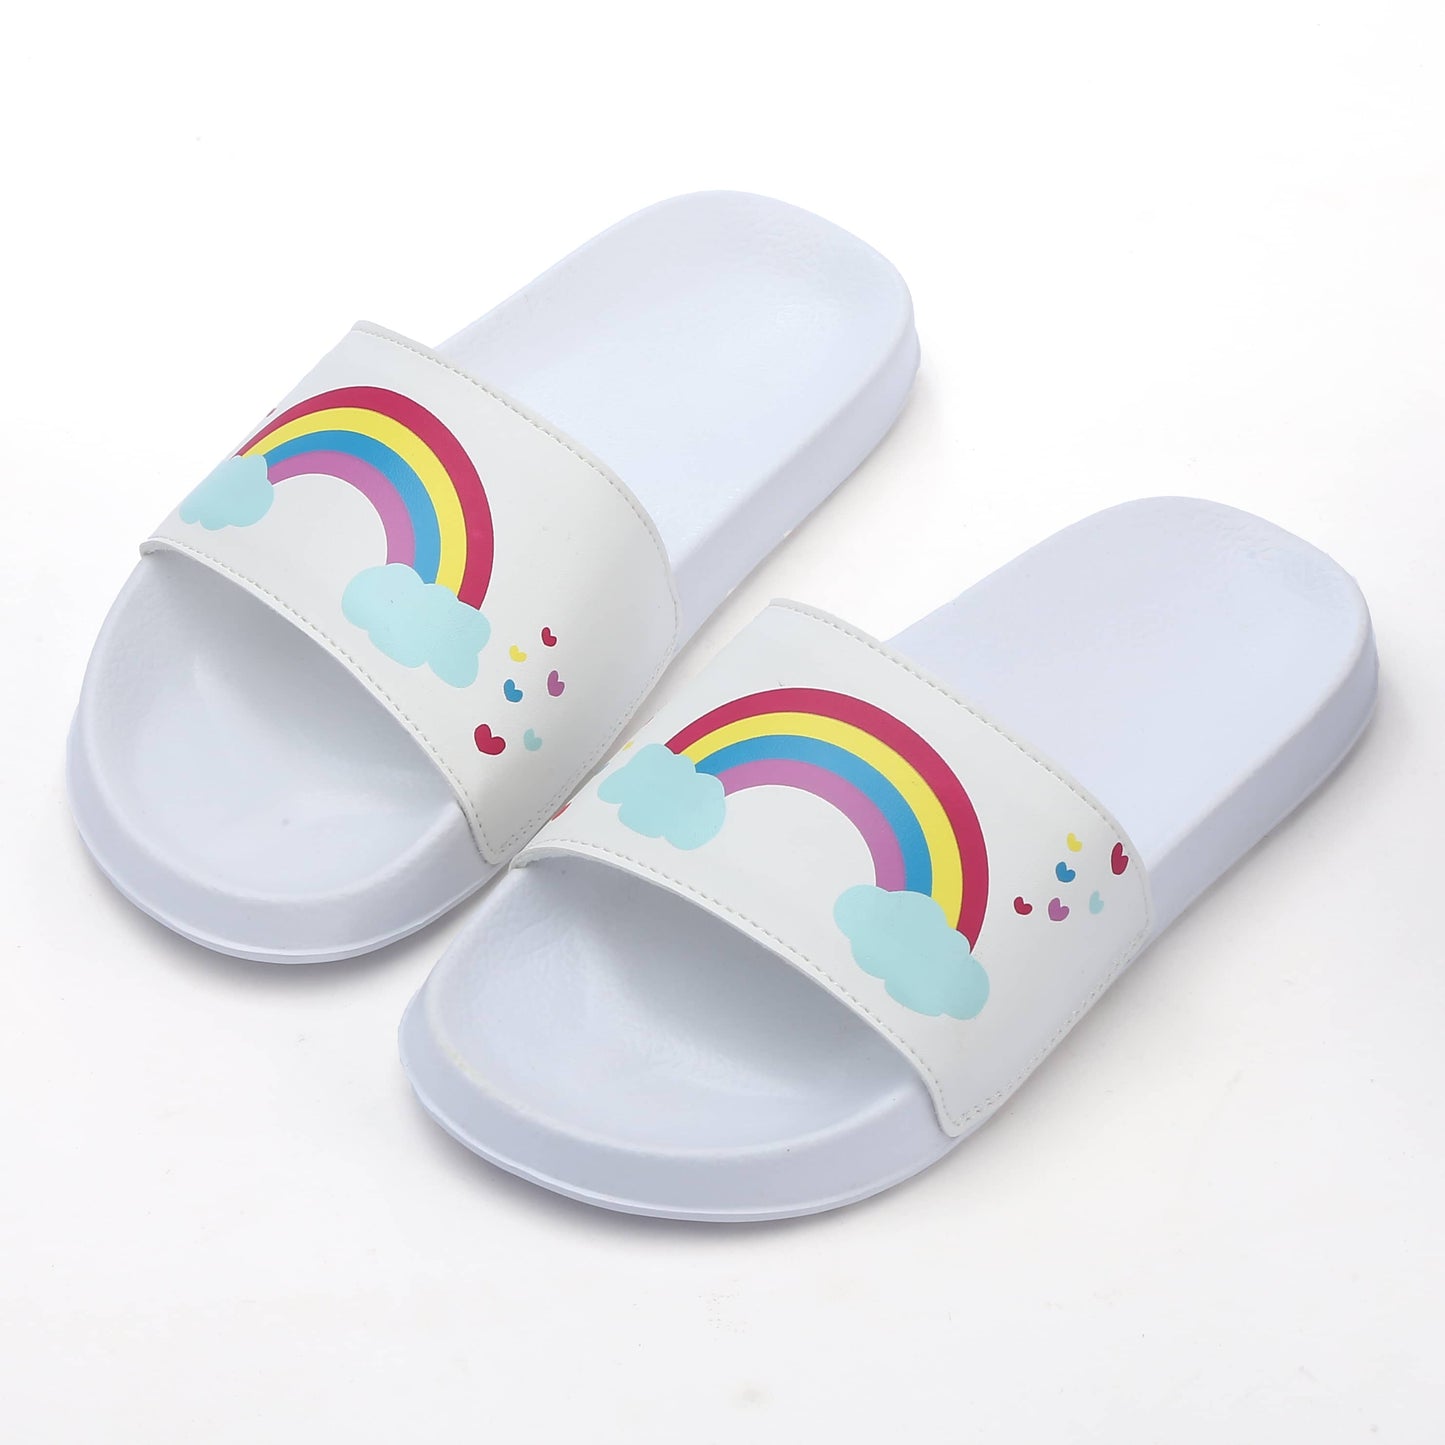 Boys Slide Sandal Children Slippers Cute Comfort Water Shoes Outdoor Indoor Beach Pool Non-Slip Slippers For Little Kids